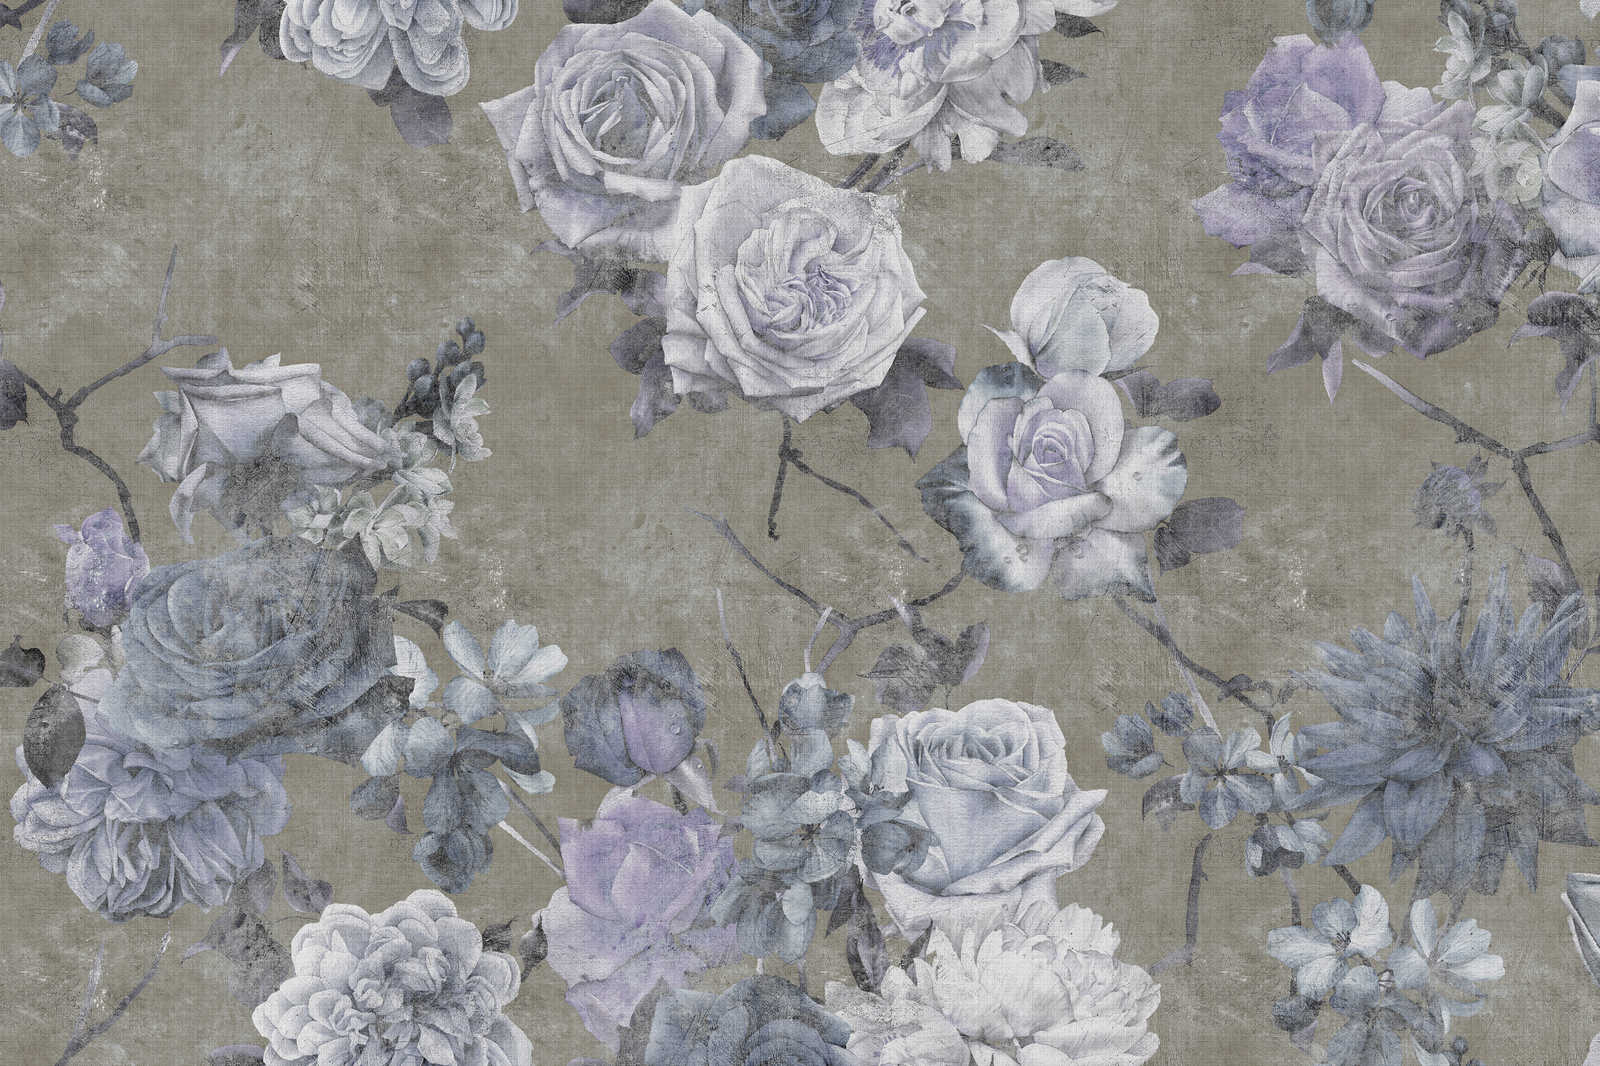             Sleeping Beauty 1 - Leinwandbild Rosenblüten im Used Look – 0,90 m x 0,60 m
        